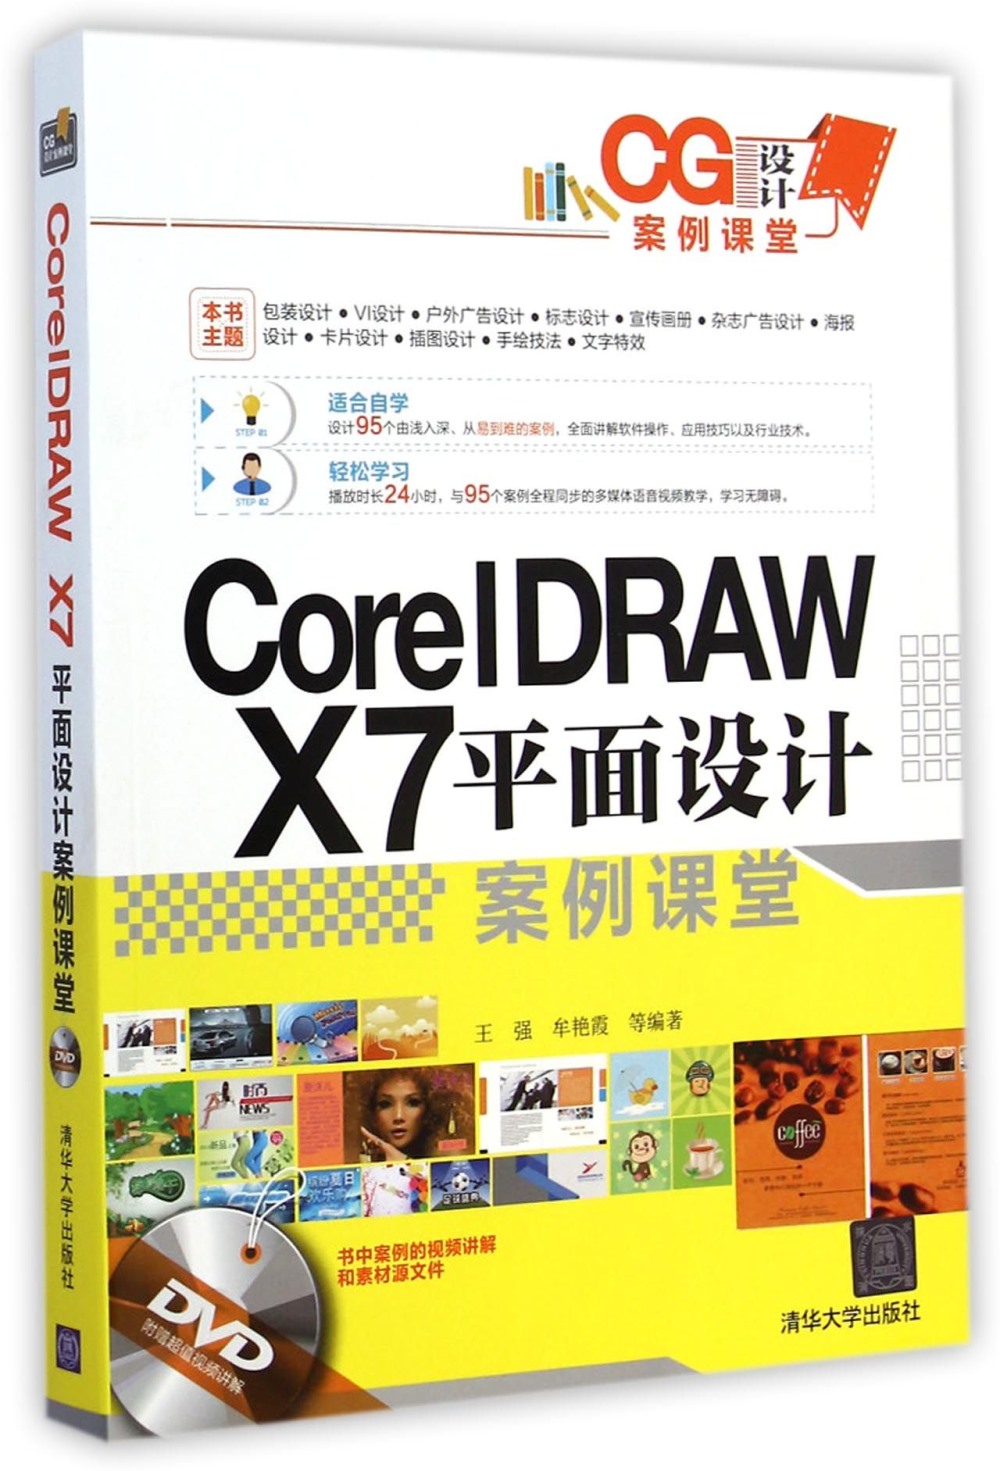 CorelDRAW X7平面設計案例課堂